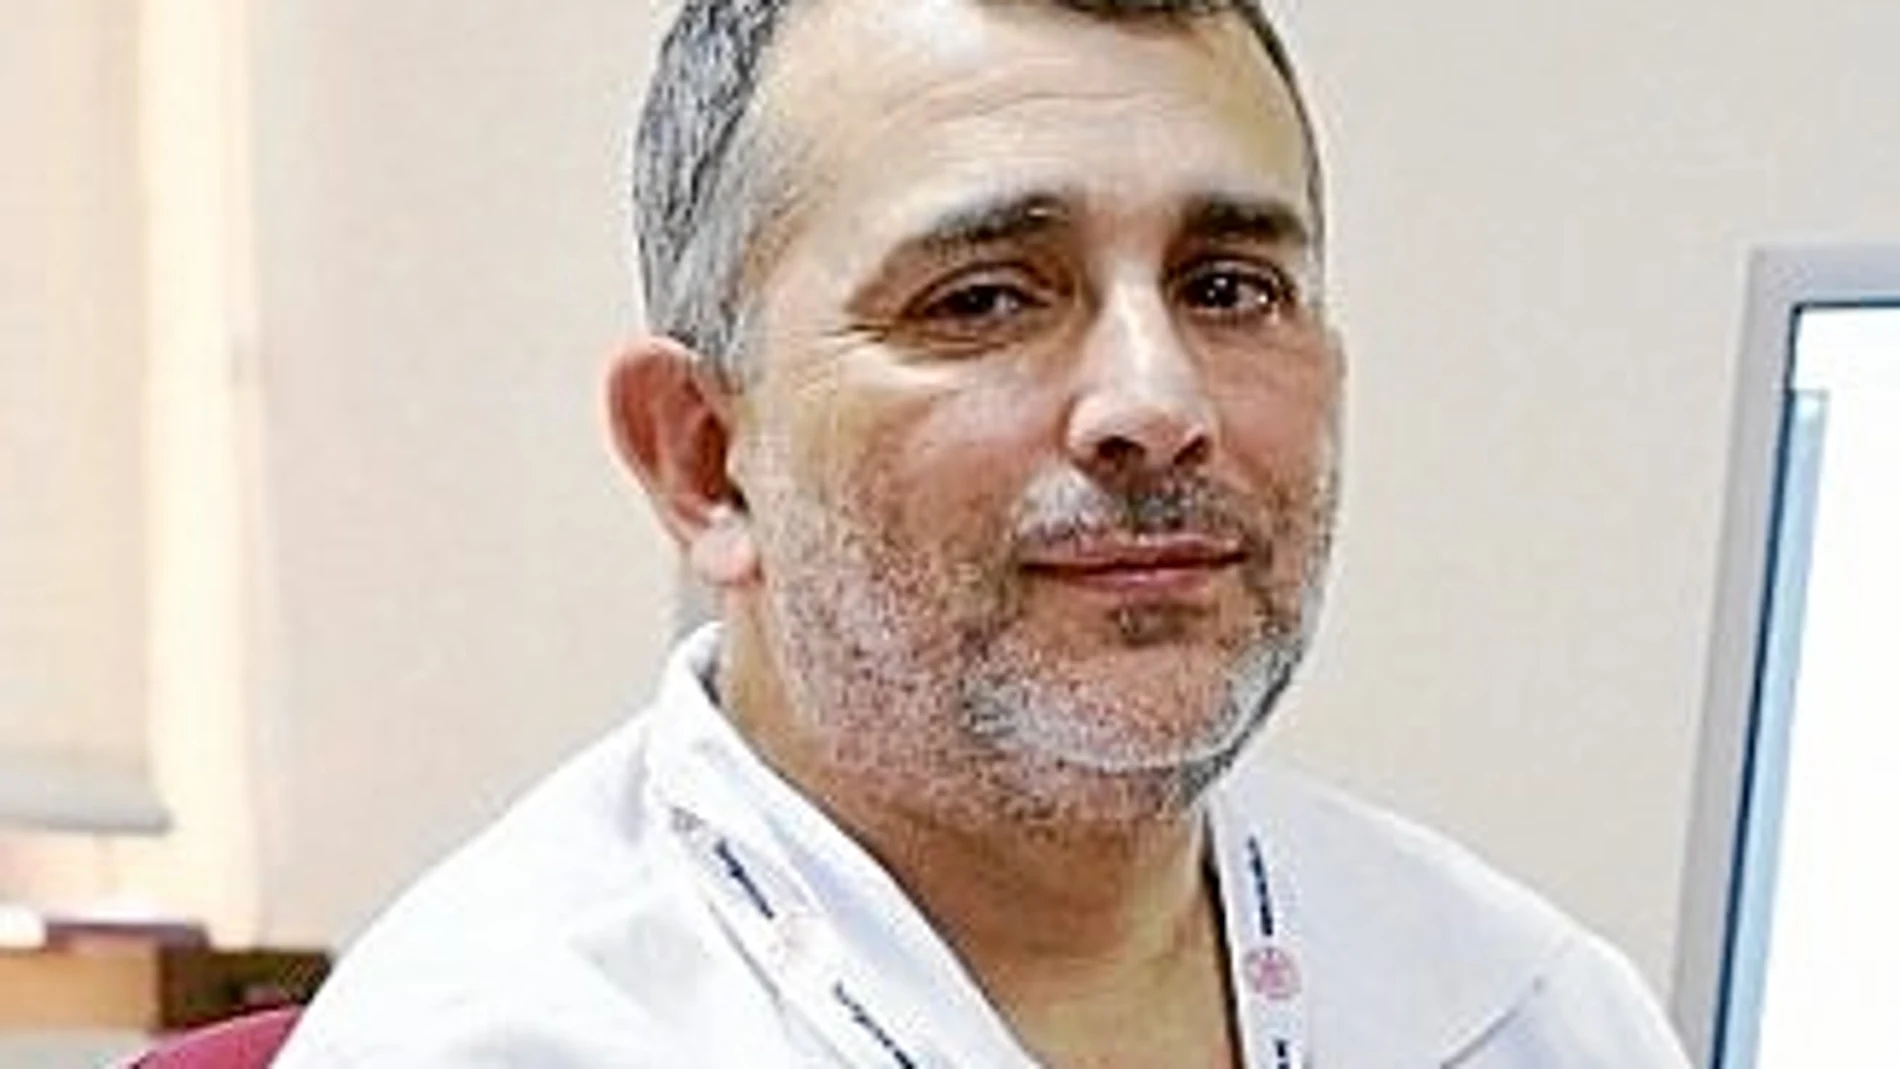 Alberto Ortiz